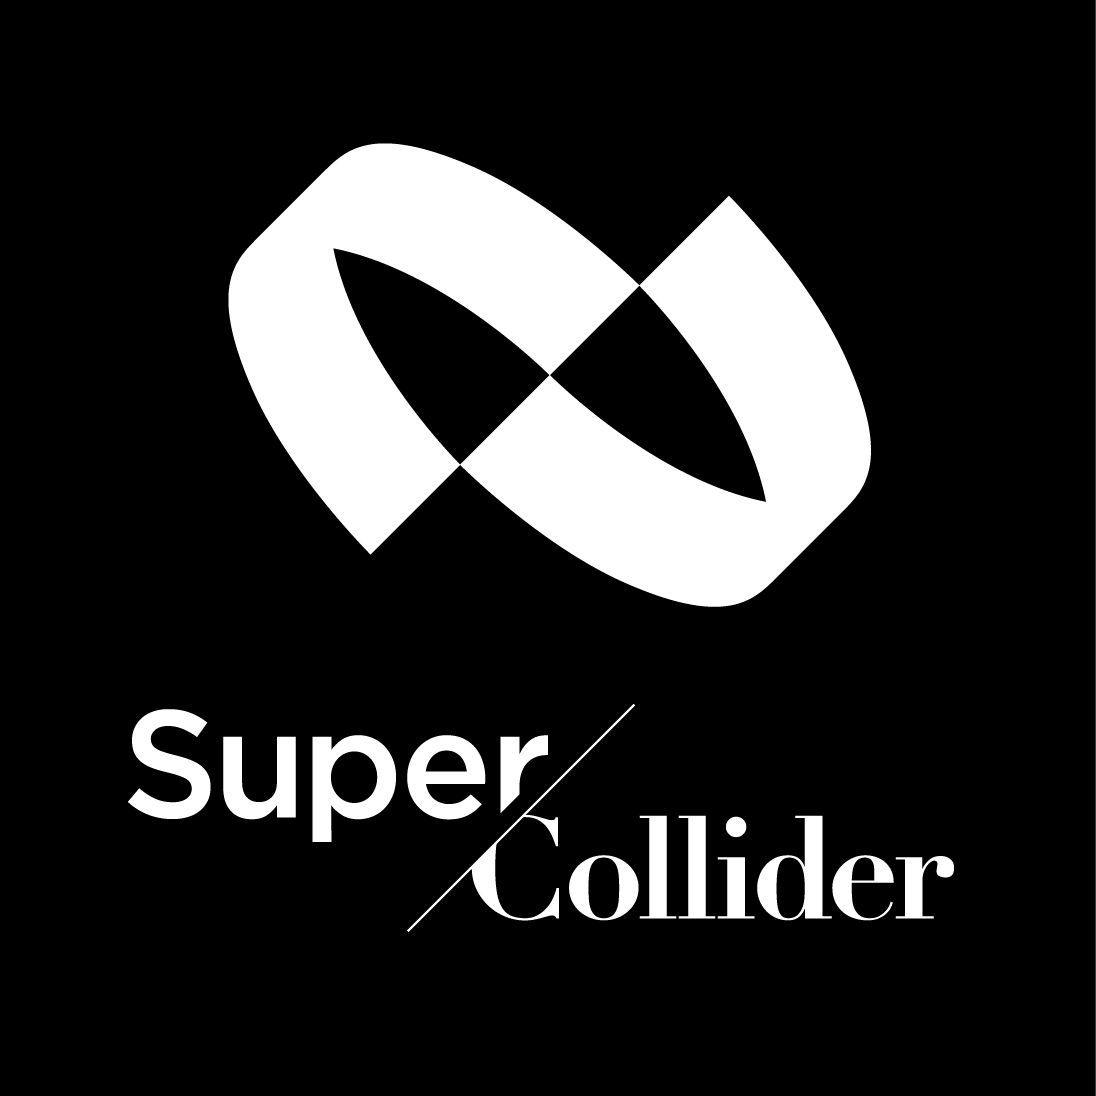 Synaptic Supercollider